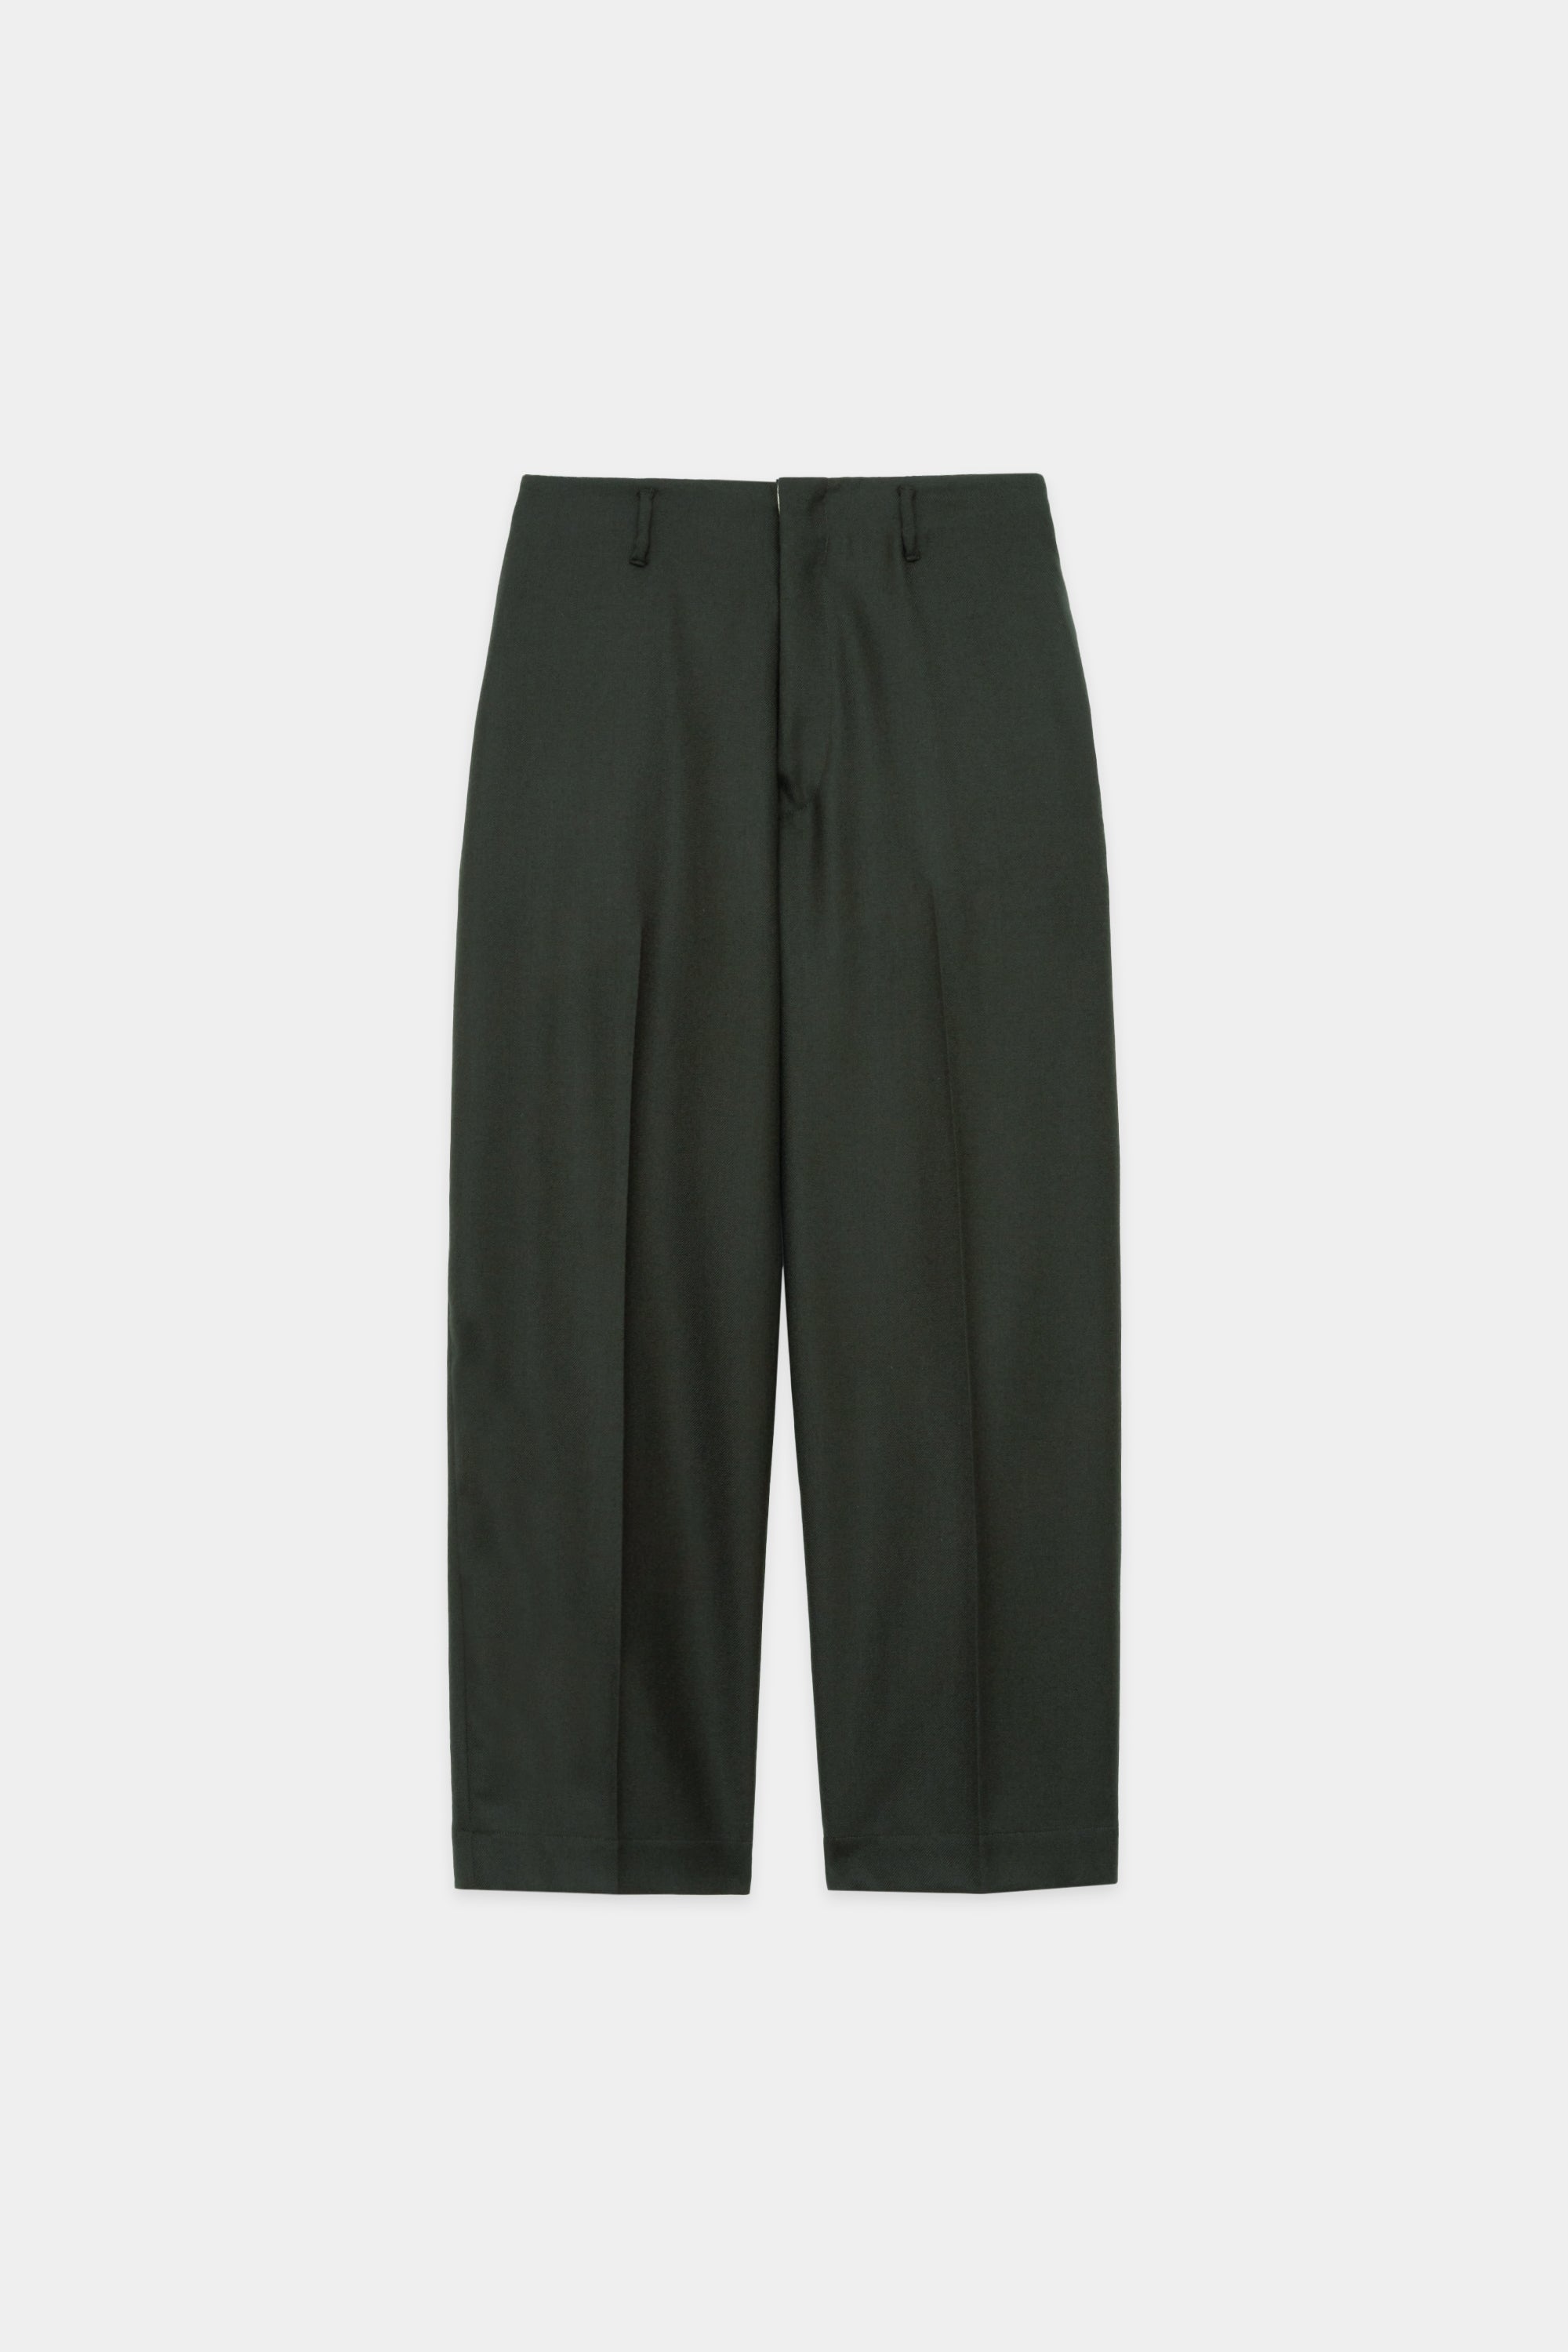 2/48 Wool Soft Serge Stitchless Trousers, Green